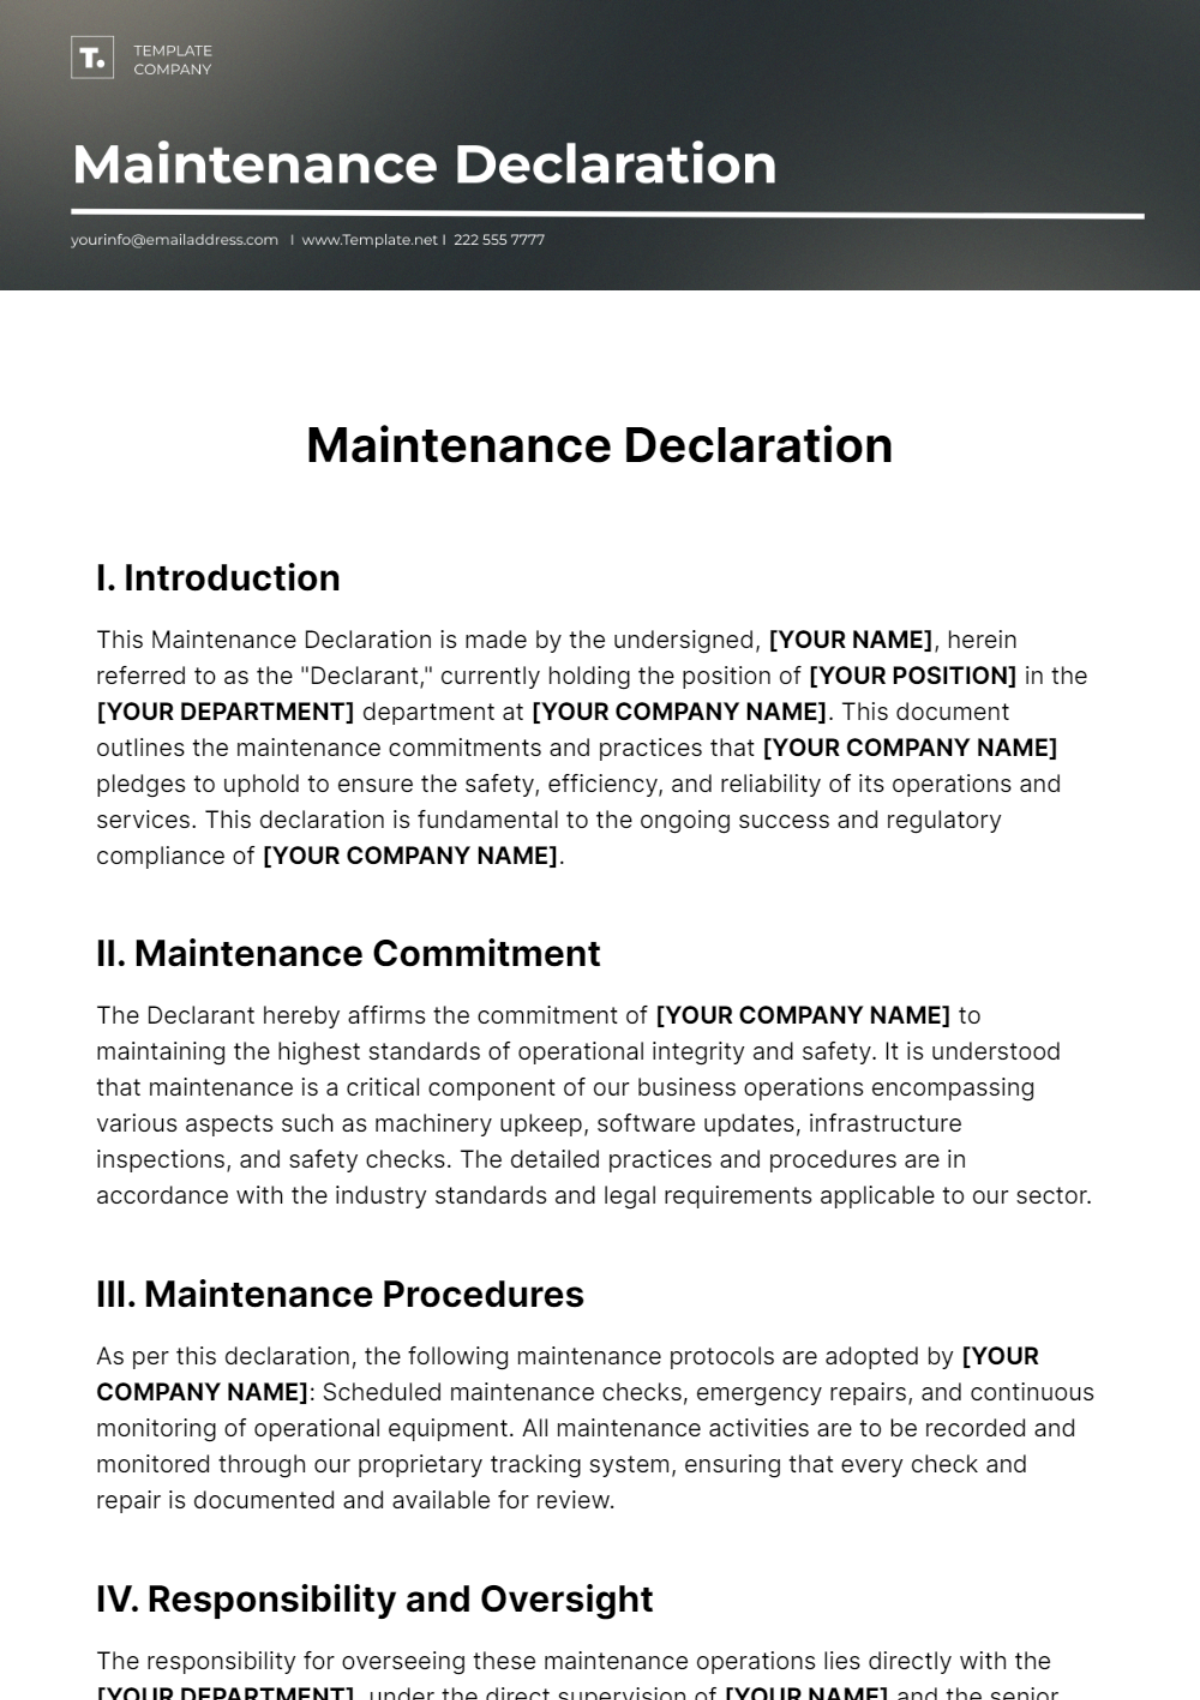 Maintenance Declaration Template